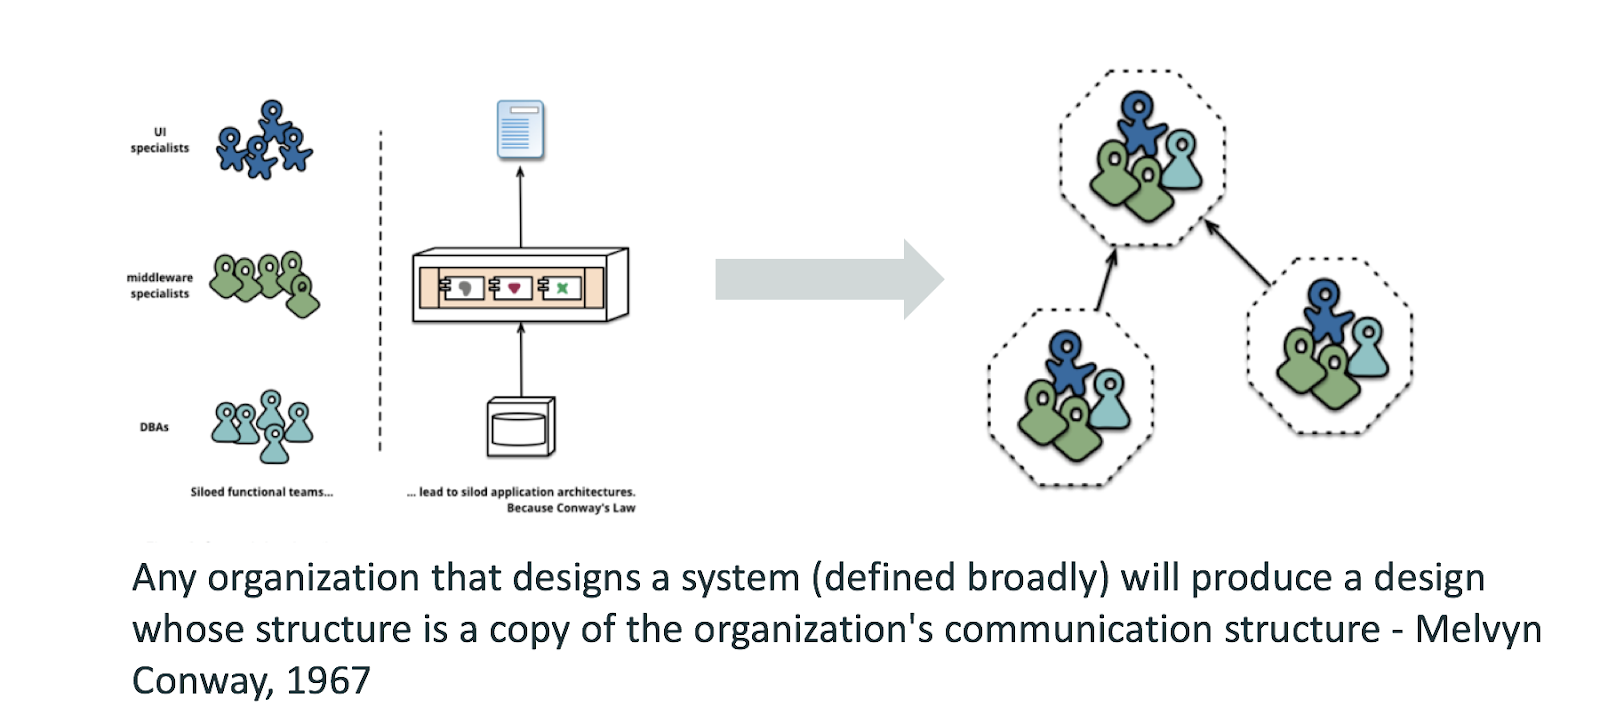 Organization communications structure